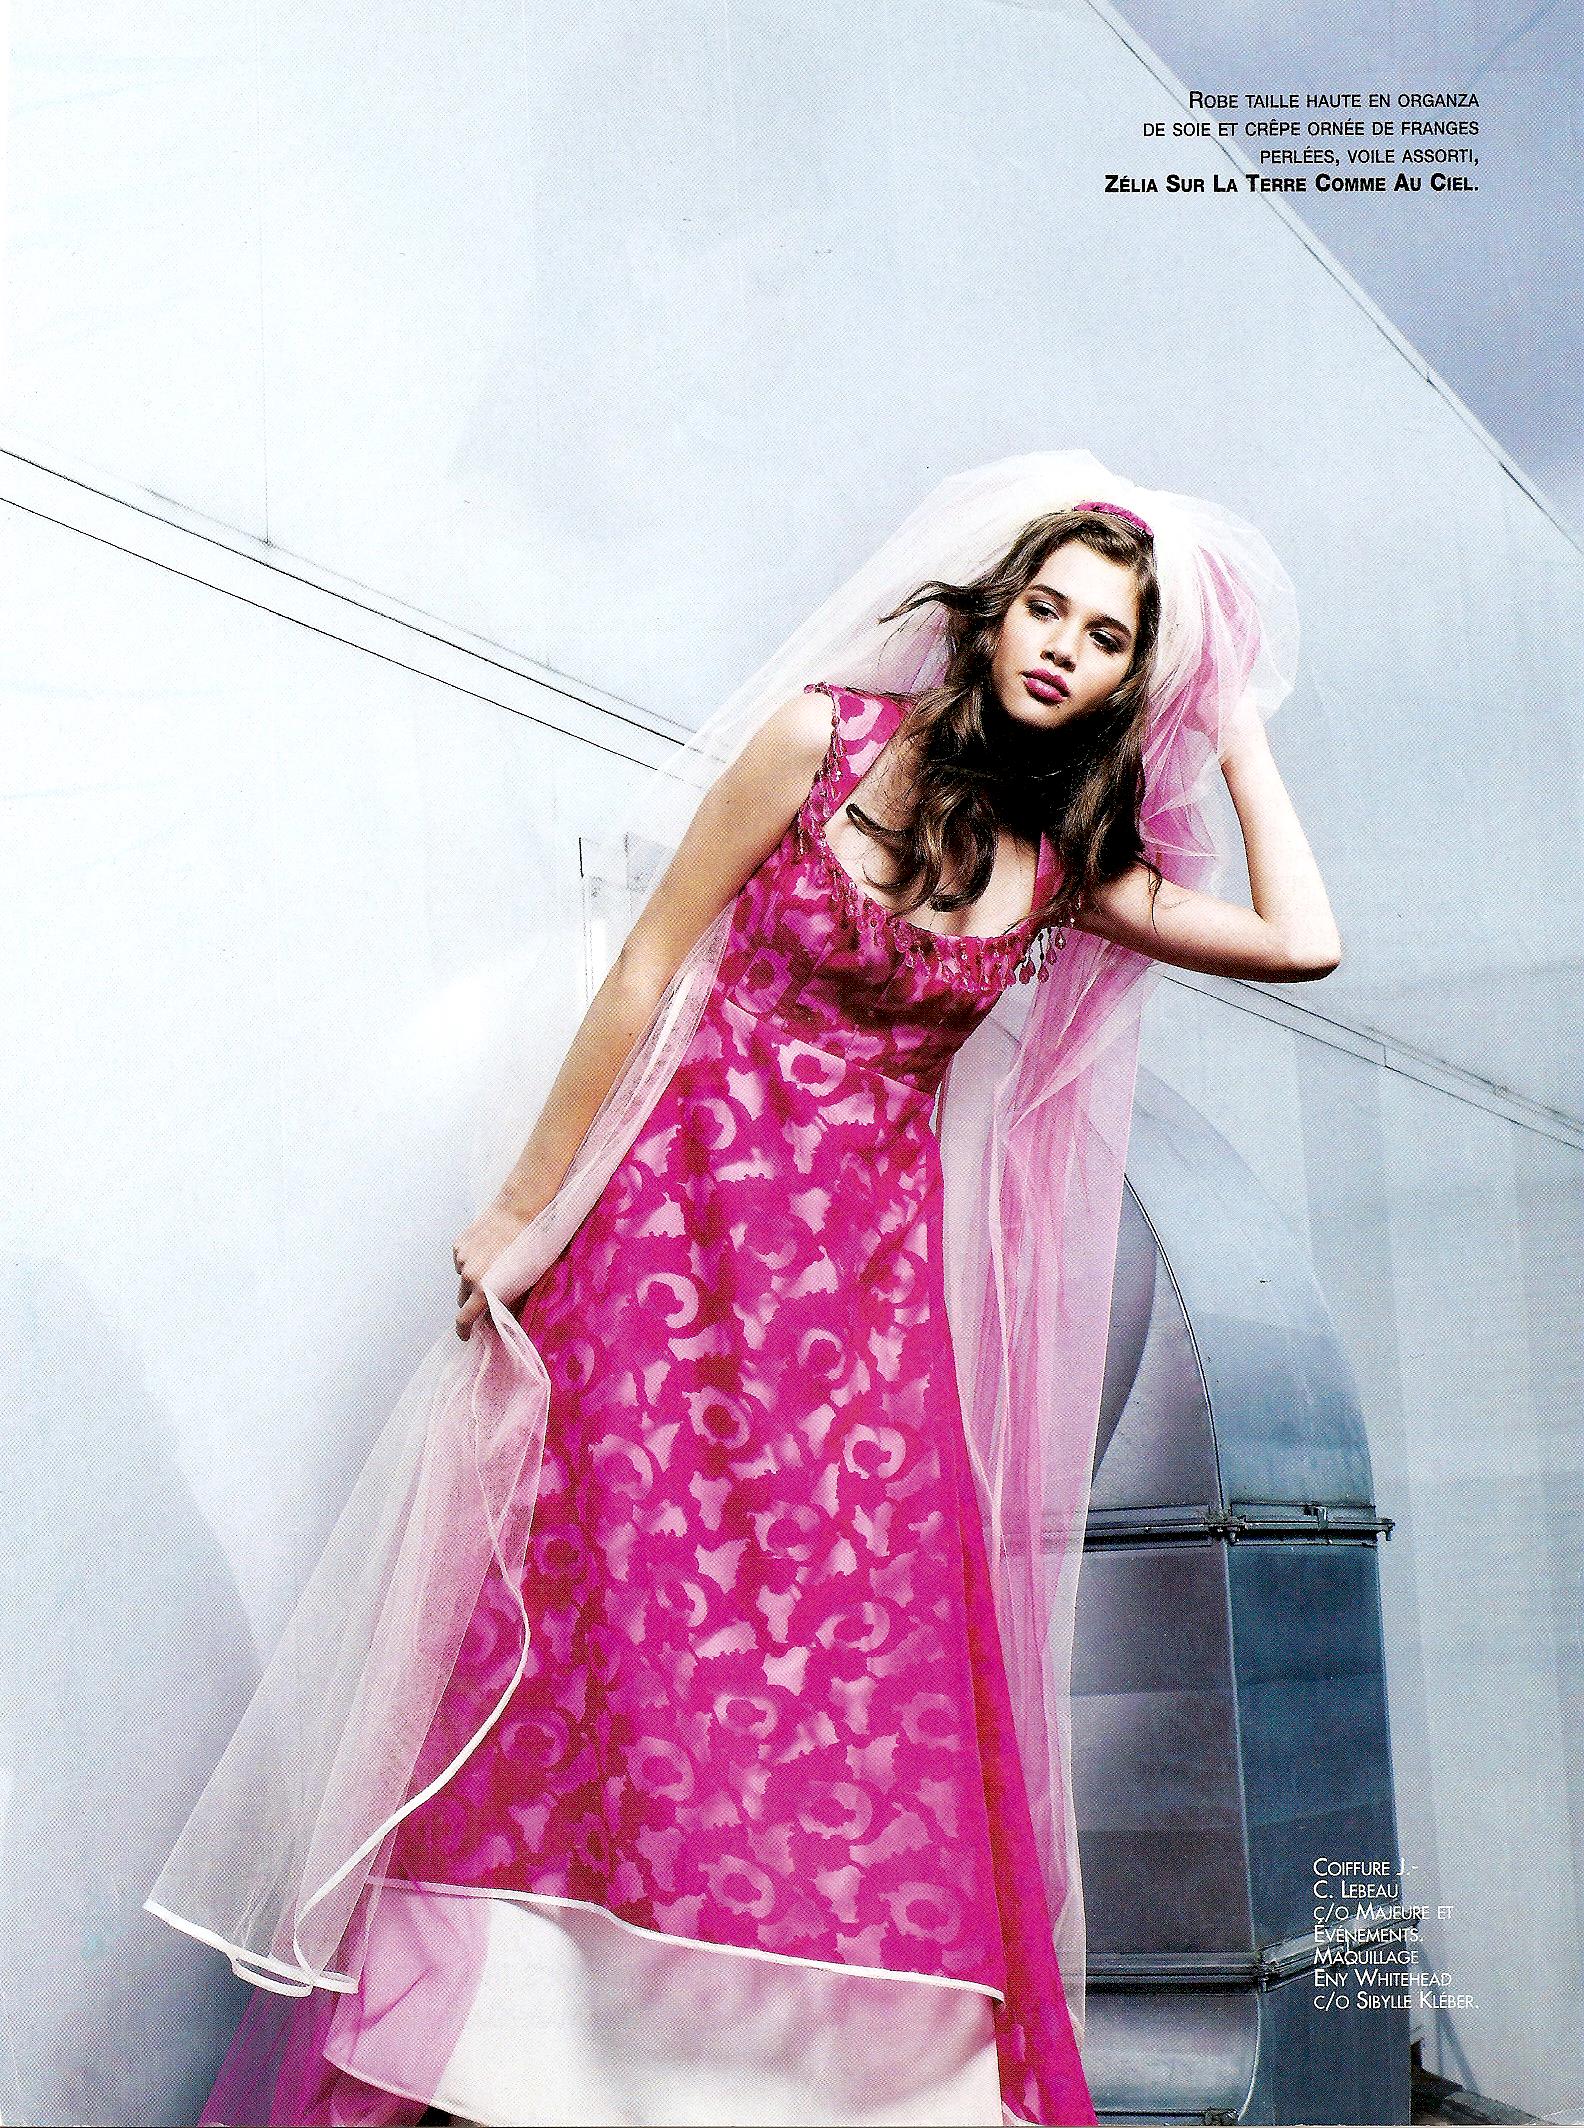 Robe de mariée rose – pink dress – robe de mariée indienne –OUI Magazine – Zélia- Paris